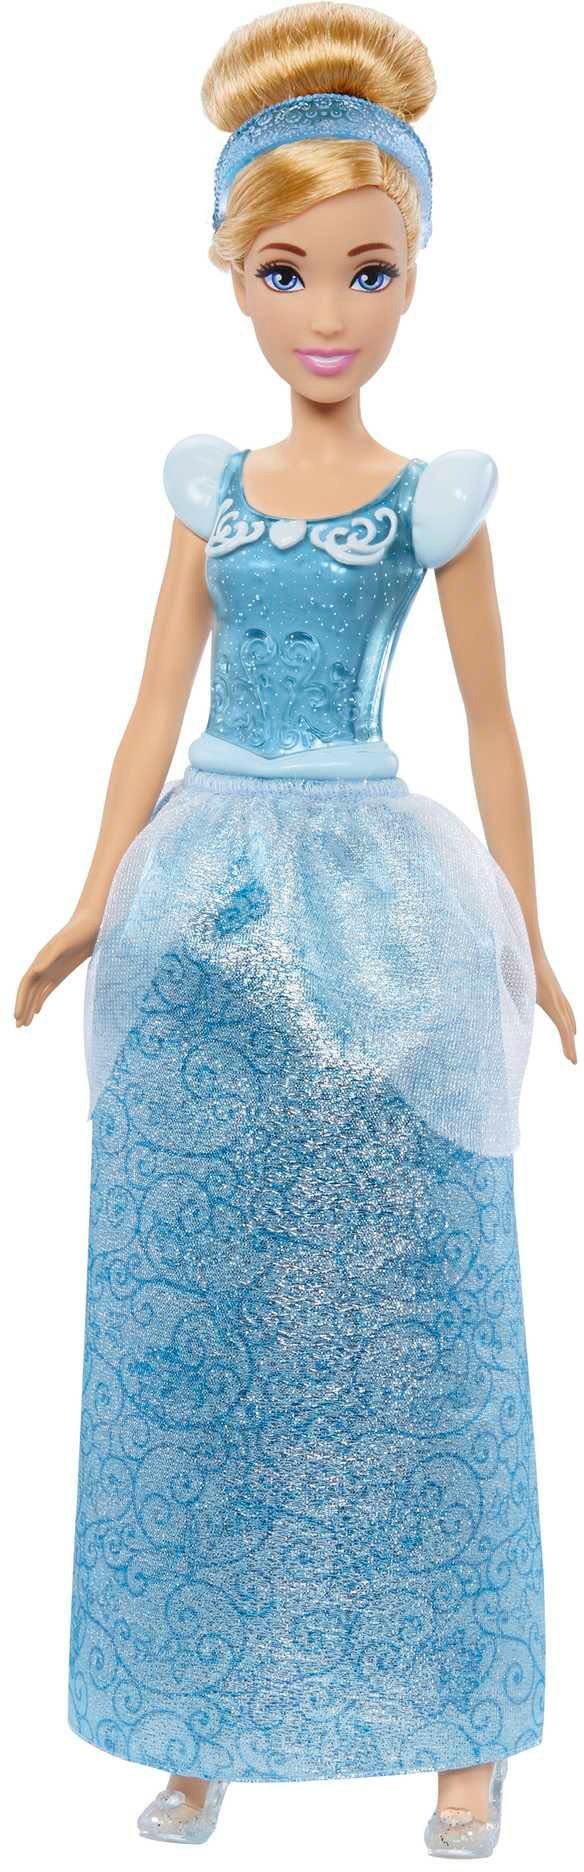 Modepuppe Mattel® Cinderella« Princess Anziehpuppe »Disney Modepuppe Princess Anziehpuppe Cinderella, Disney